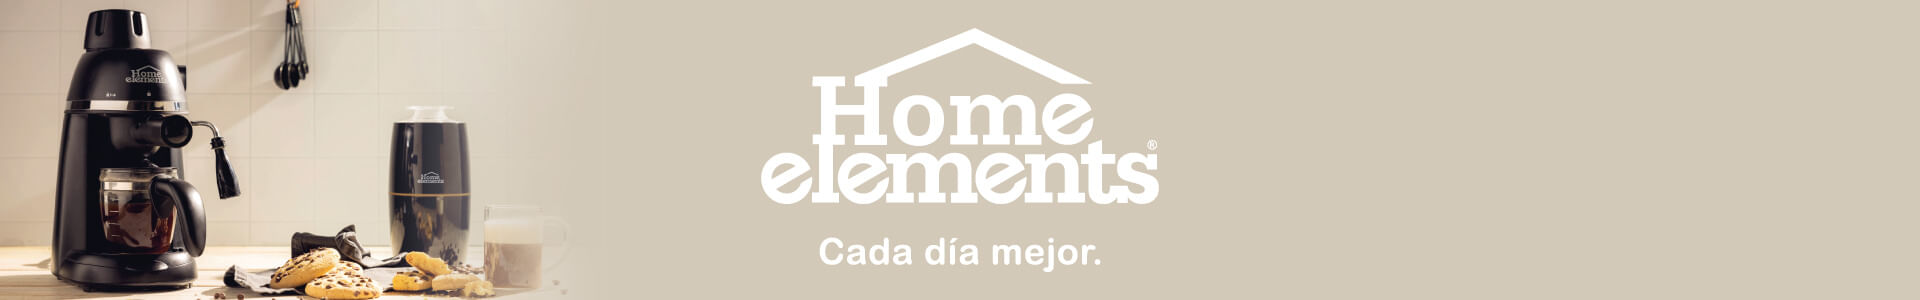 Electrodomésticos Home Elements